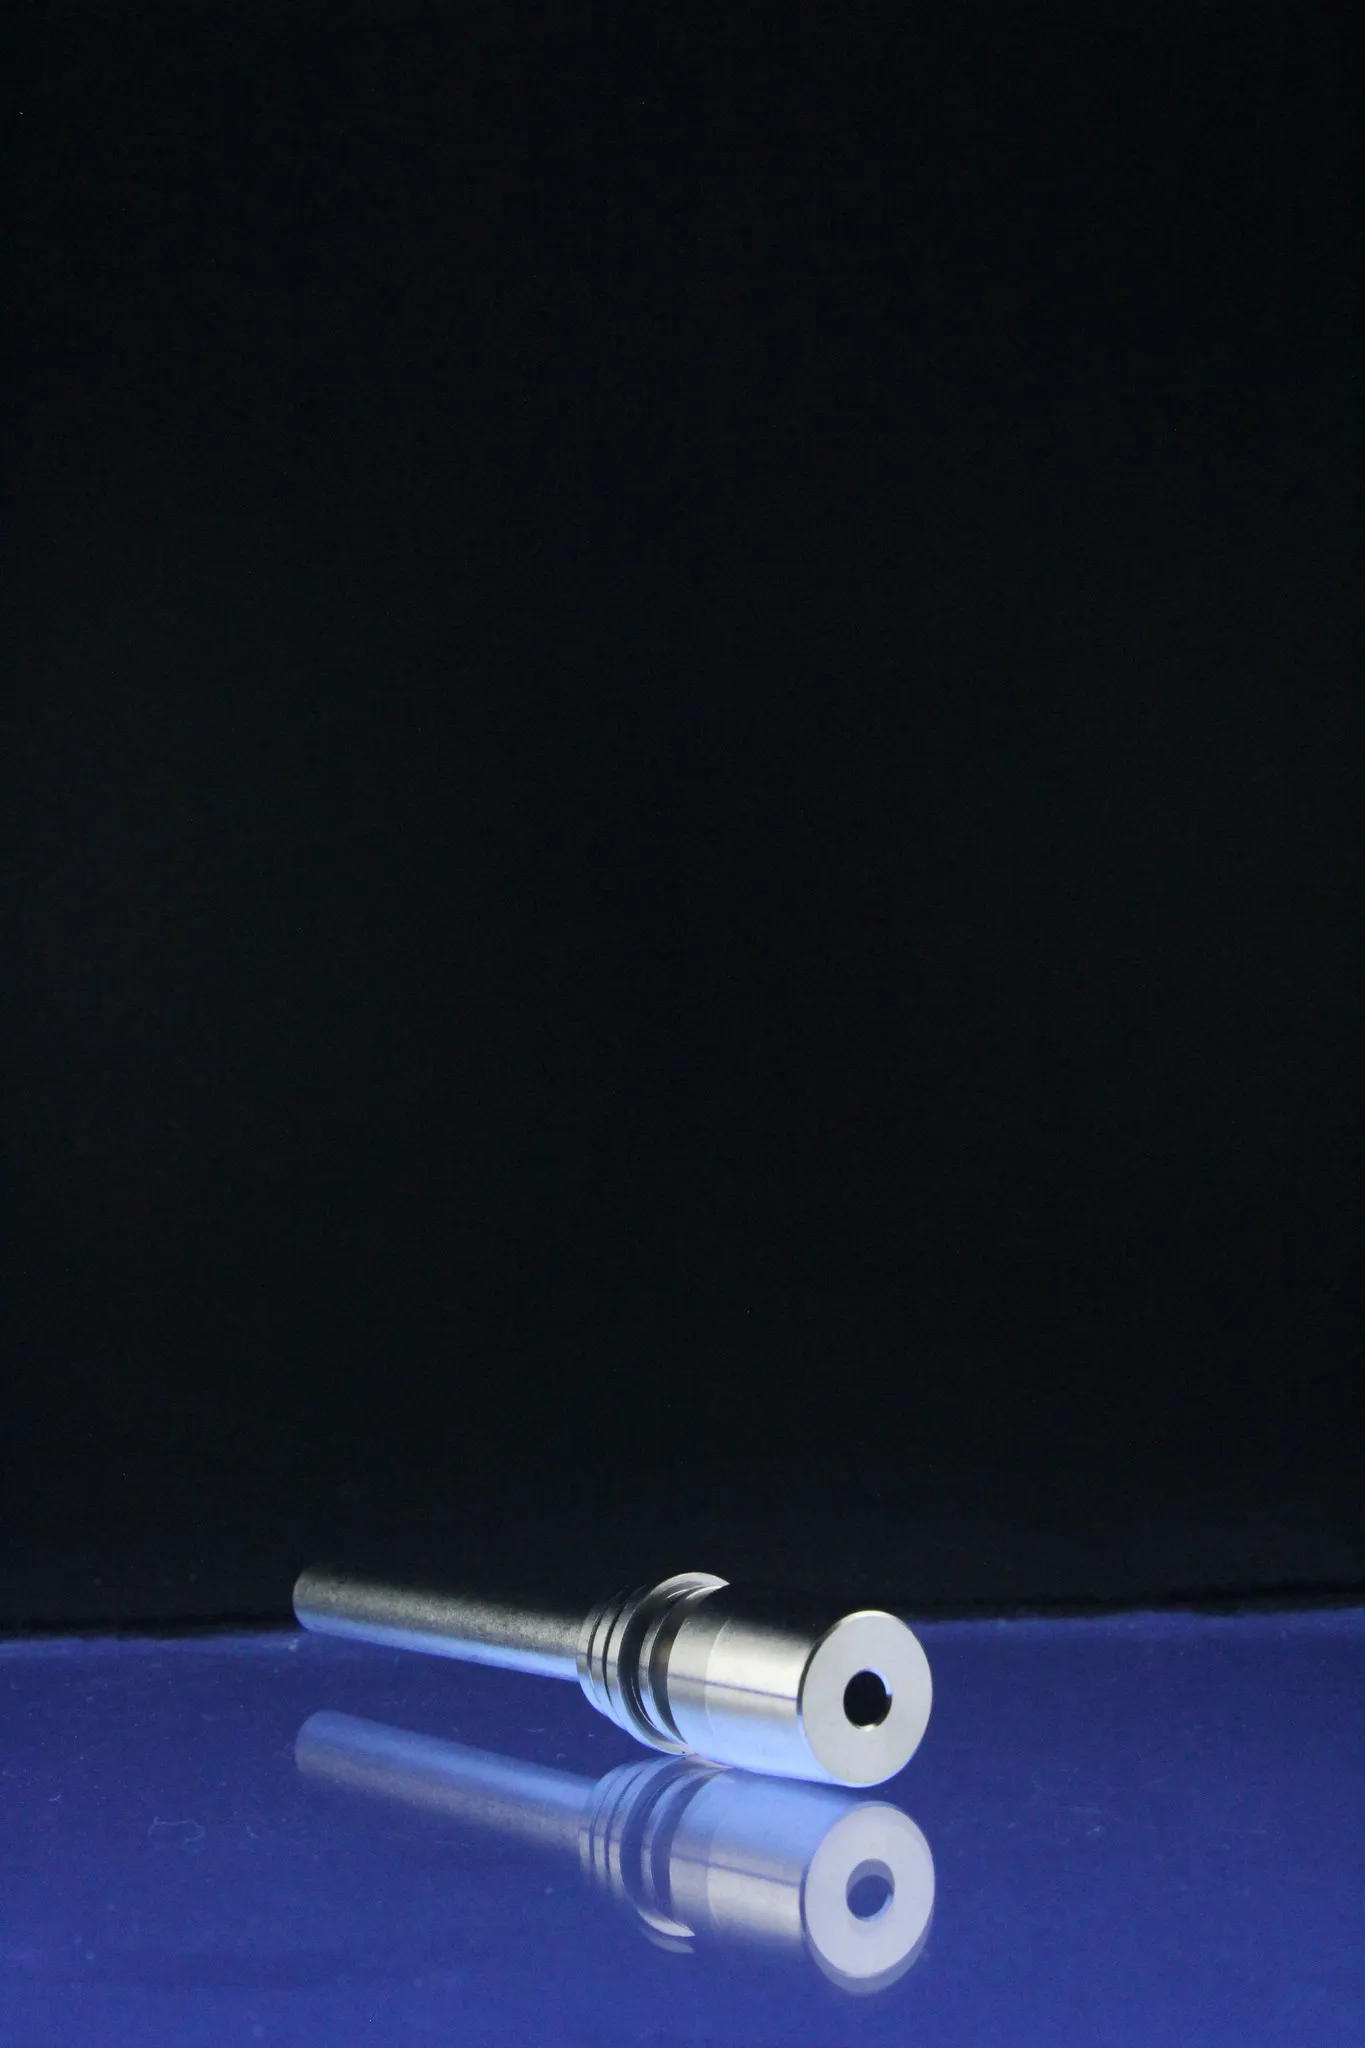 Titan-Nektarsammler-Spitze, 10 mm, 14 mm, 19 mm, Nektarsammler, Titan-Nagel, Glasbong, GR2, Titan-Nagel für Dab-Strohhalm